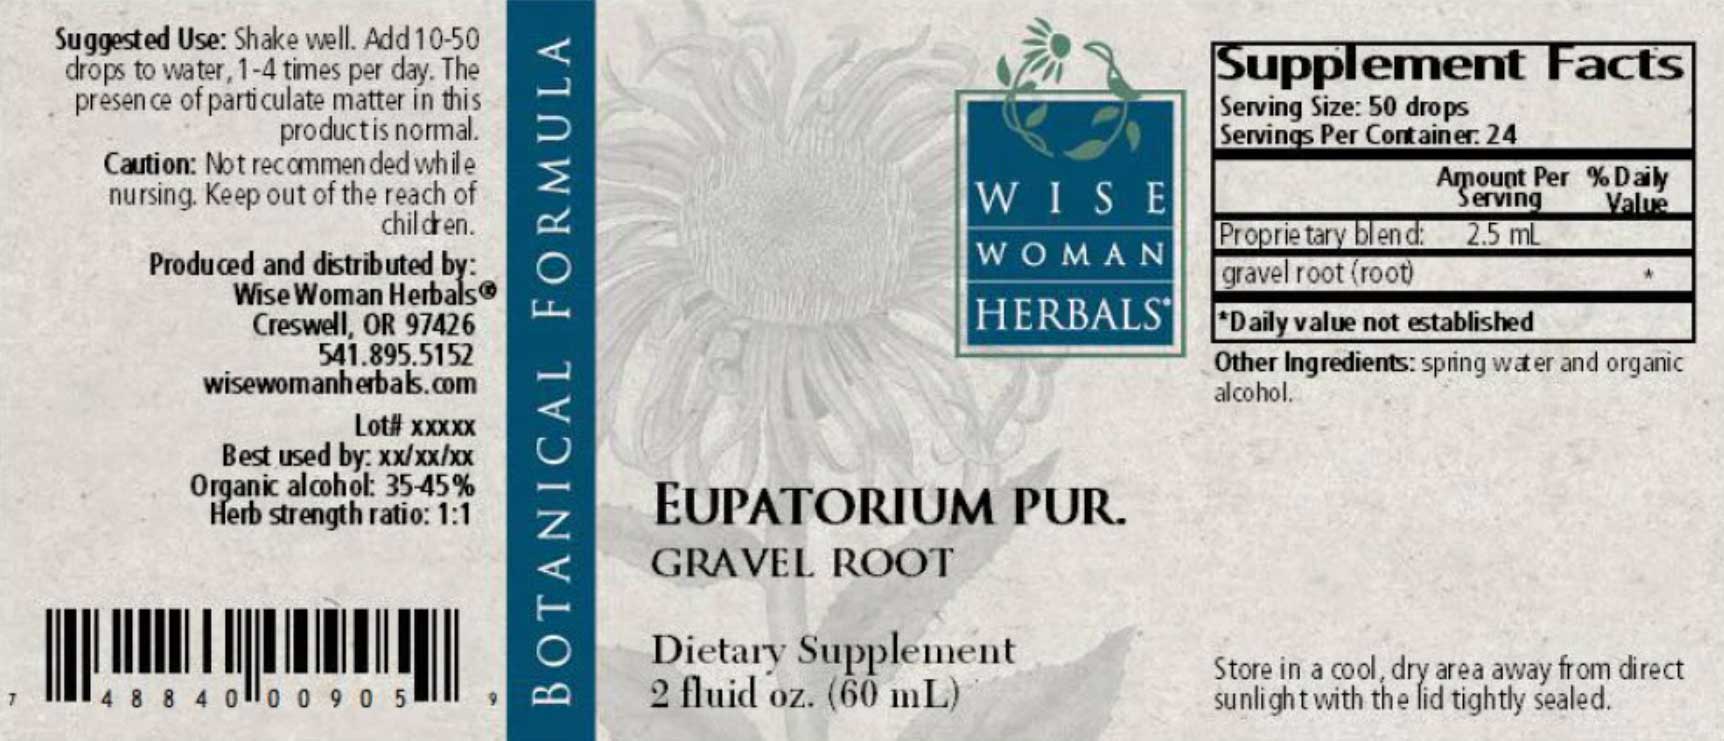 Wise Woman Herbals Eupatorium Purpureum Gravel Root Label